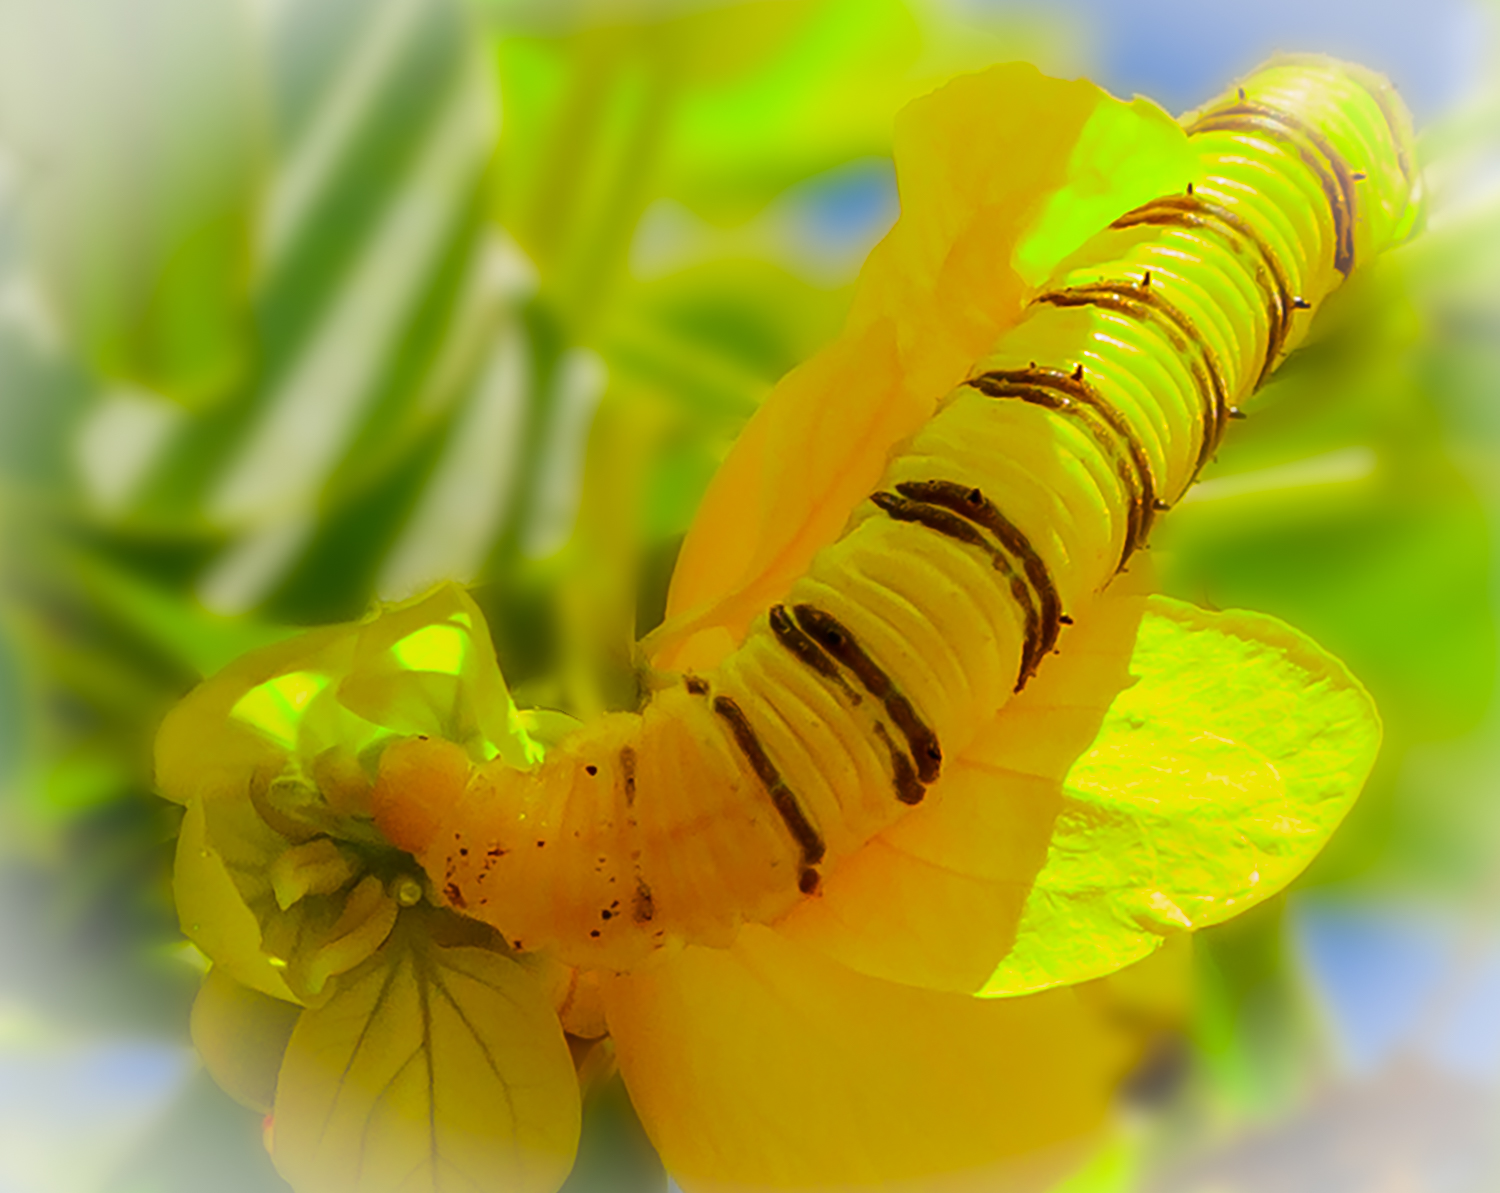 Yellow Flower Caterpillar - Score 85